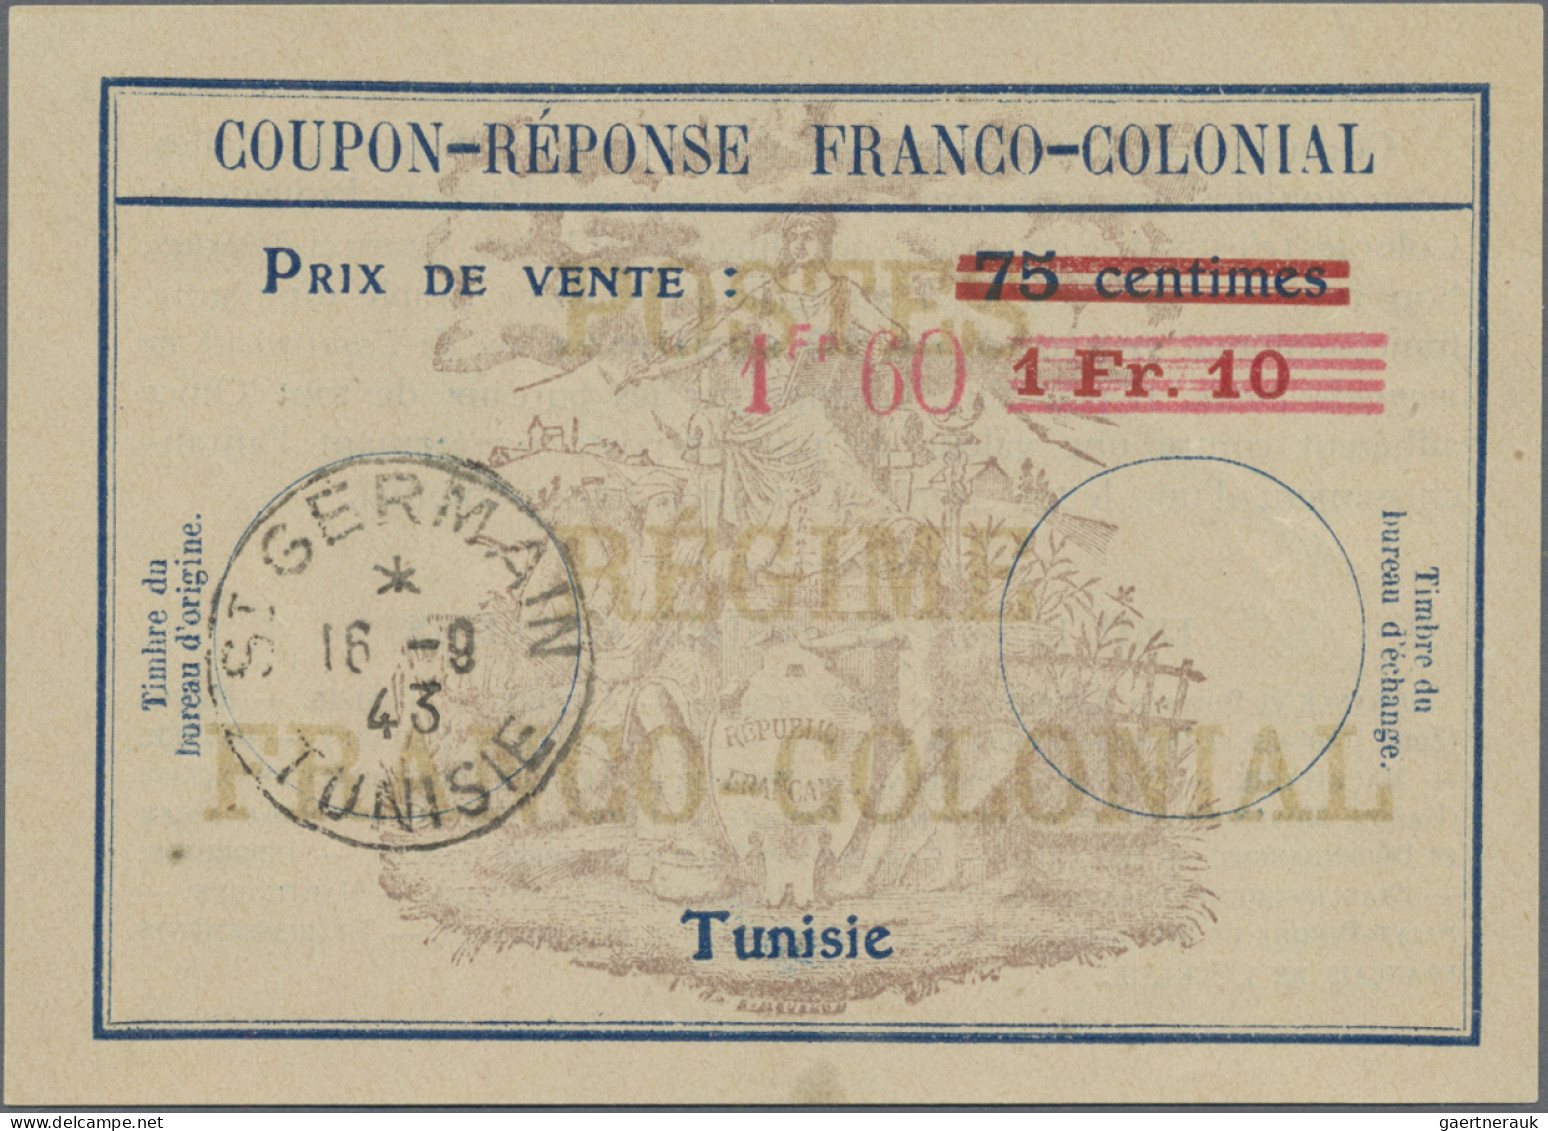 Tunisia - Postal Stationery: 1943 Coupon-Réponse Franco-Colonial "1Fr 60" On "1F - Tunisia